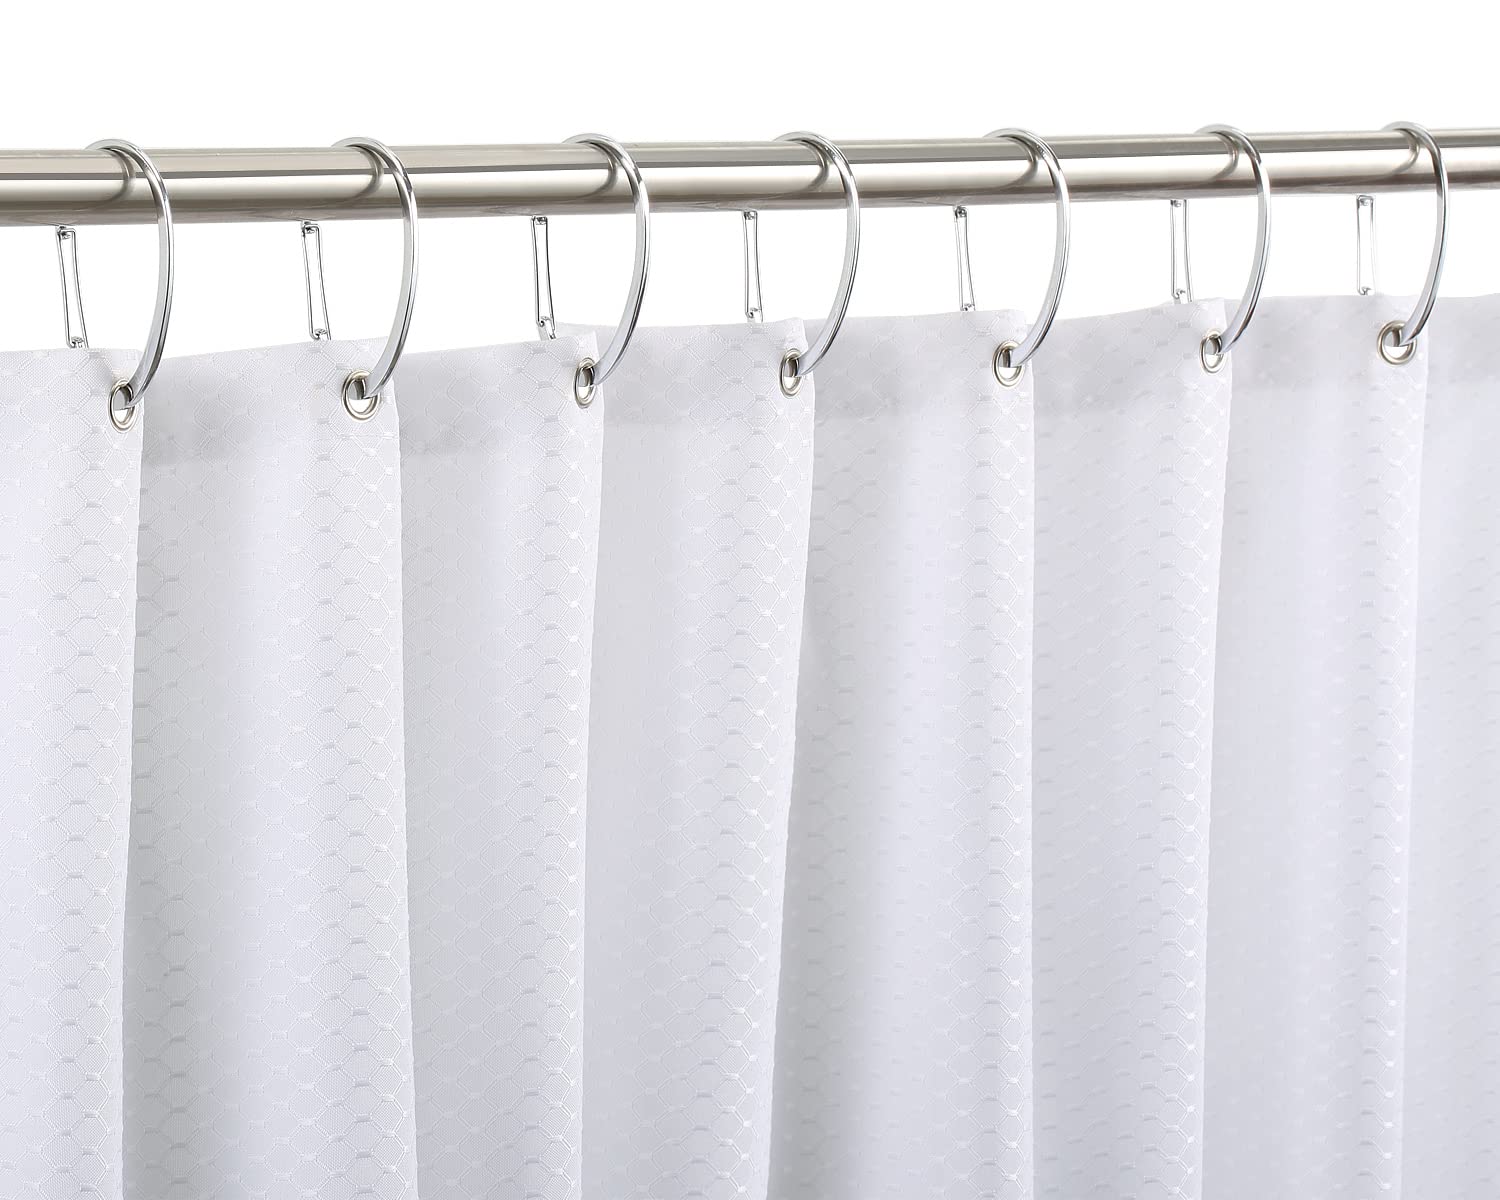 Silver Shower Curtain Rings, Rustproof Shower Curtain Hooks for Bathroom, ZESLMG Chrome Decorative Shower Hooks Rings for Shower Curtain Rod Hangers, Set of 12